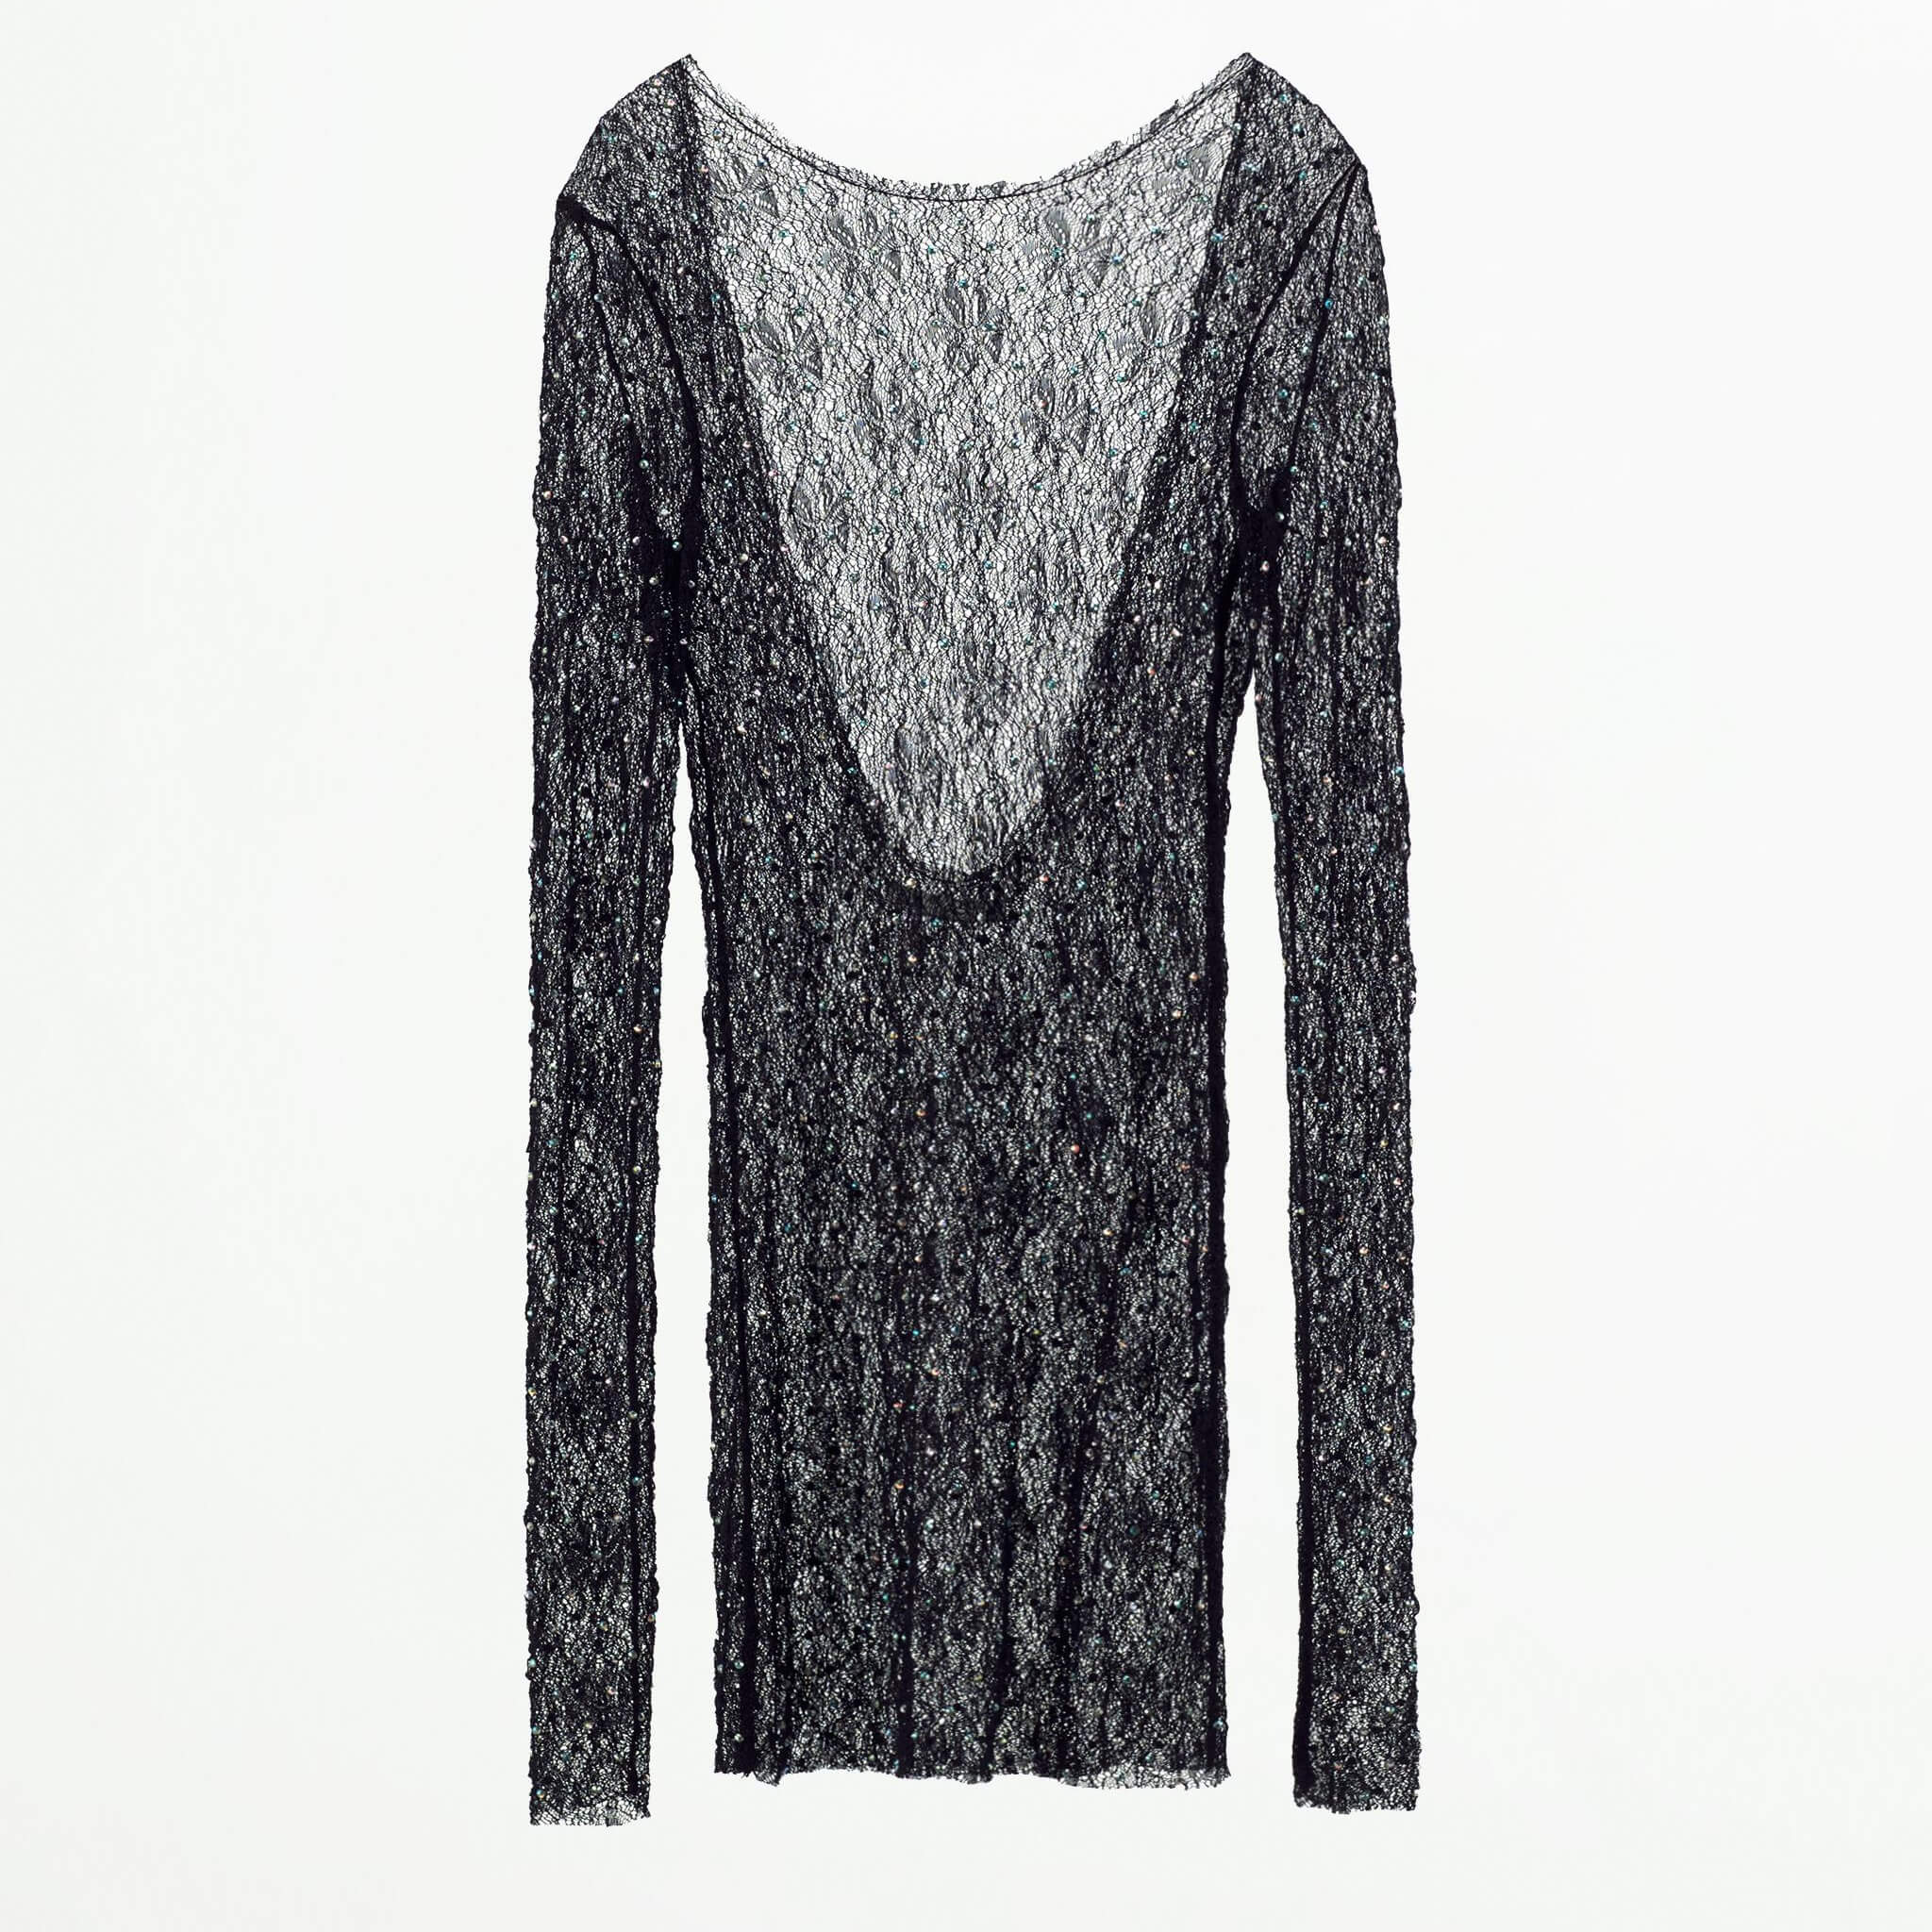 Топ Zara Lace With Rhinestones, черный футболка zara embellished with rhinestones белый